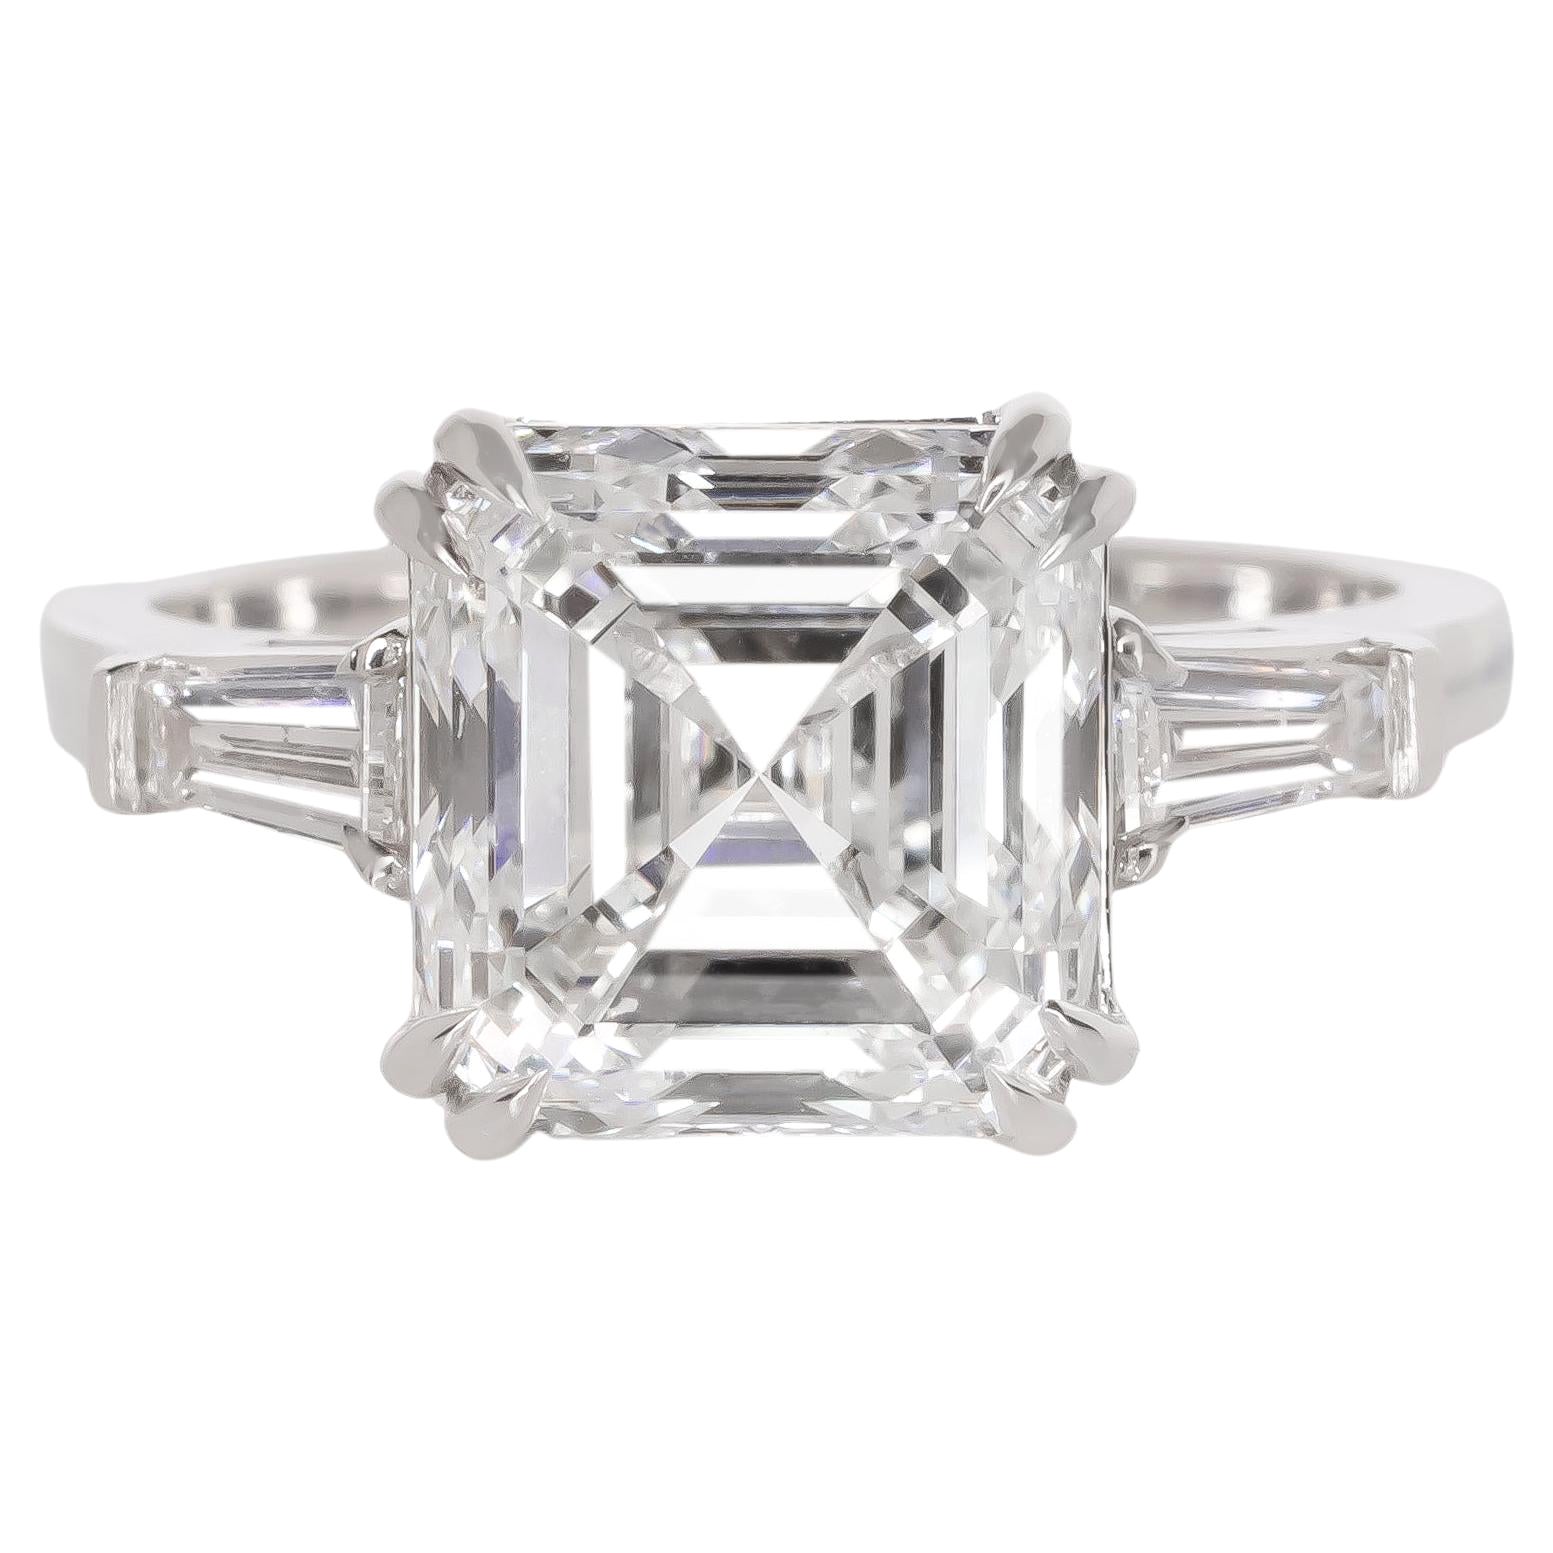 EXCEPTIONAL GIA Certified 5 Carat VS2 Asscher Cut Diamond Ring